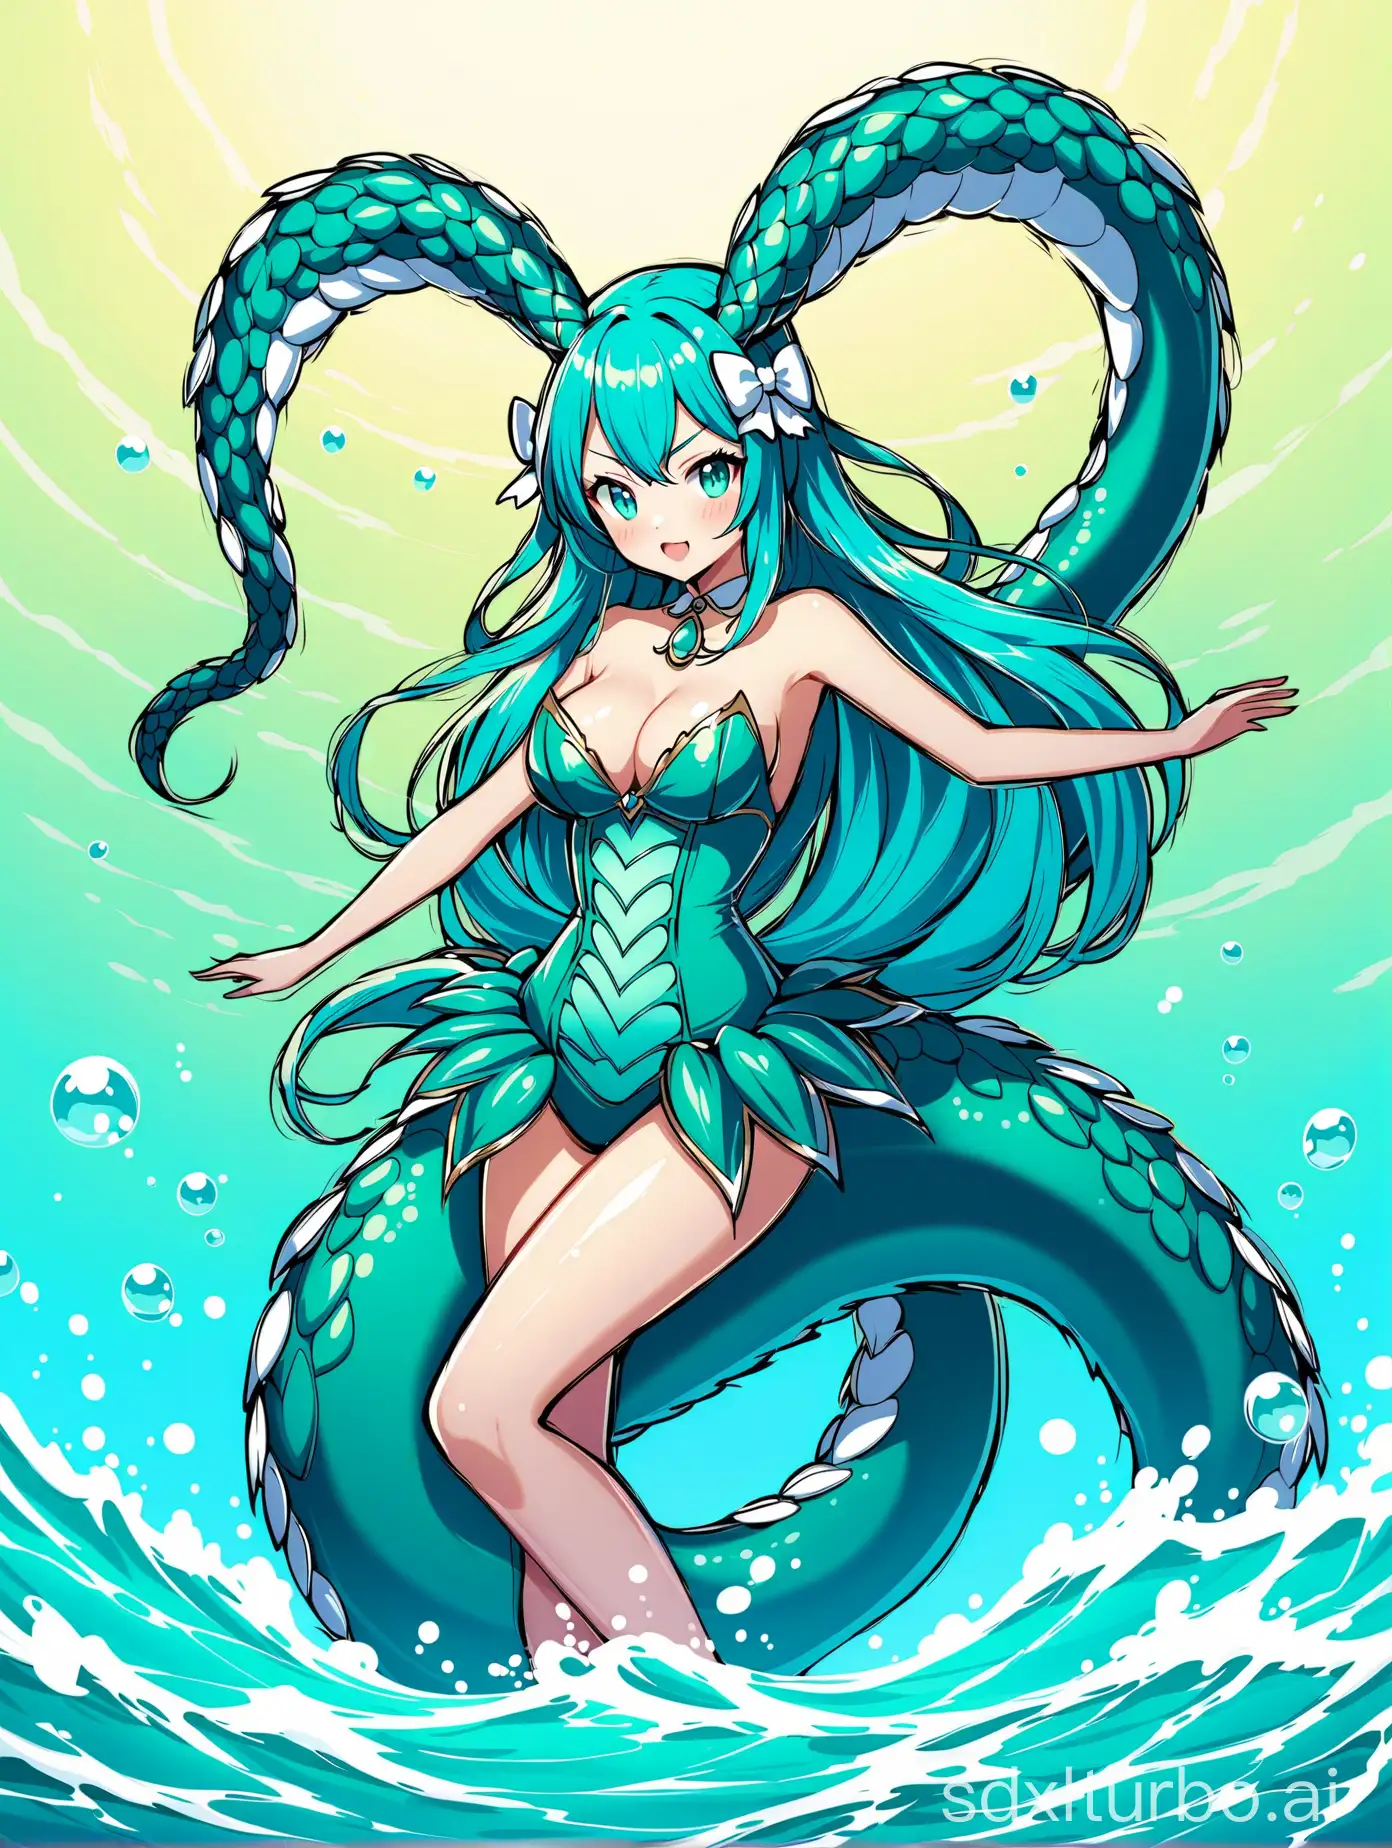 Siren-Sea-Monster-in-Bunny-Girl-Costume